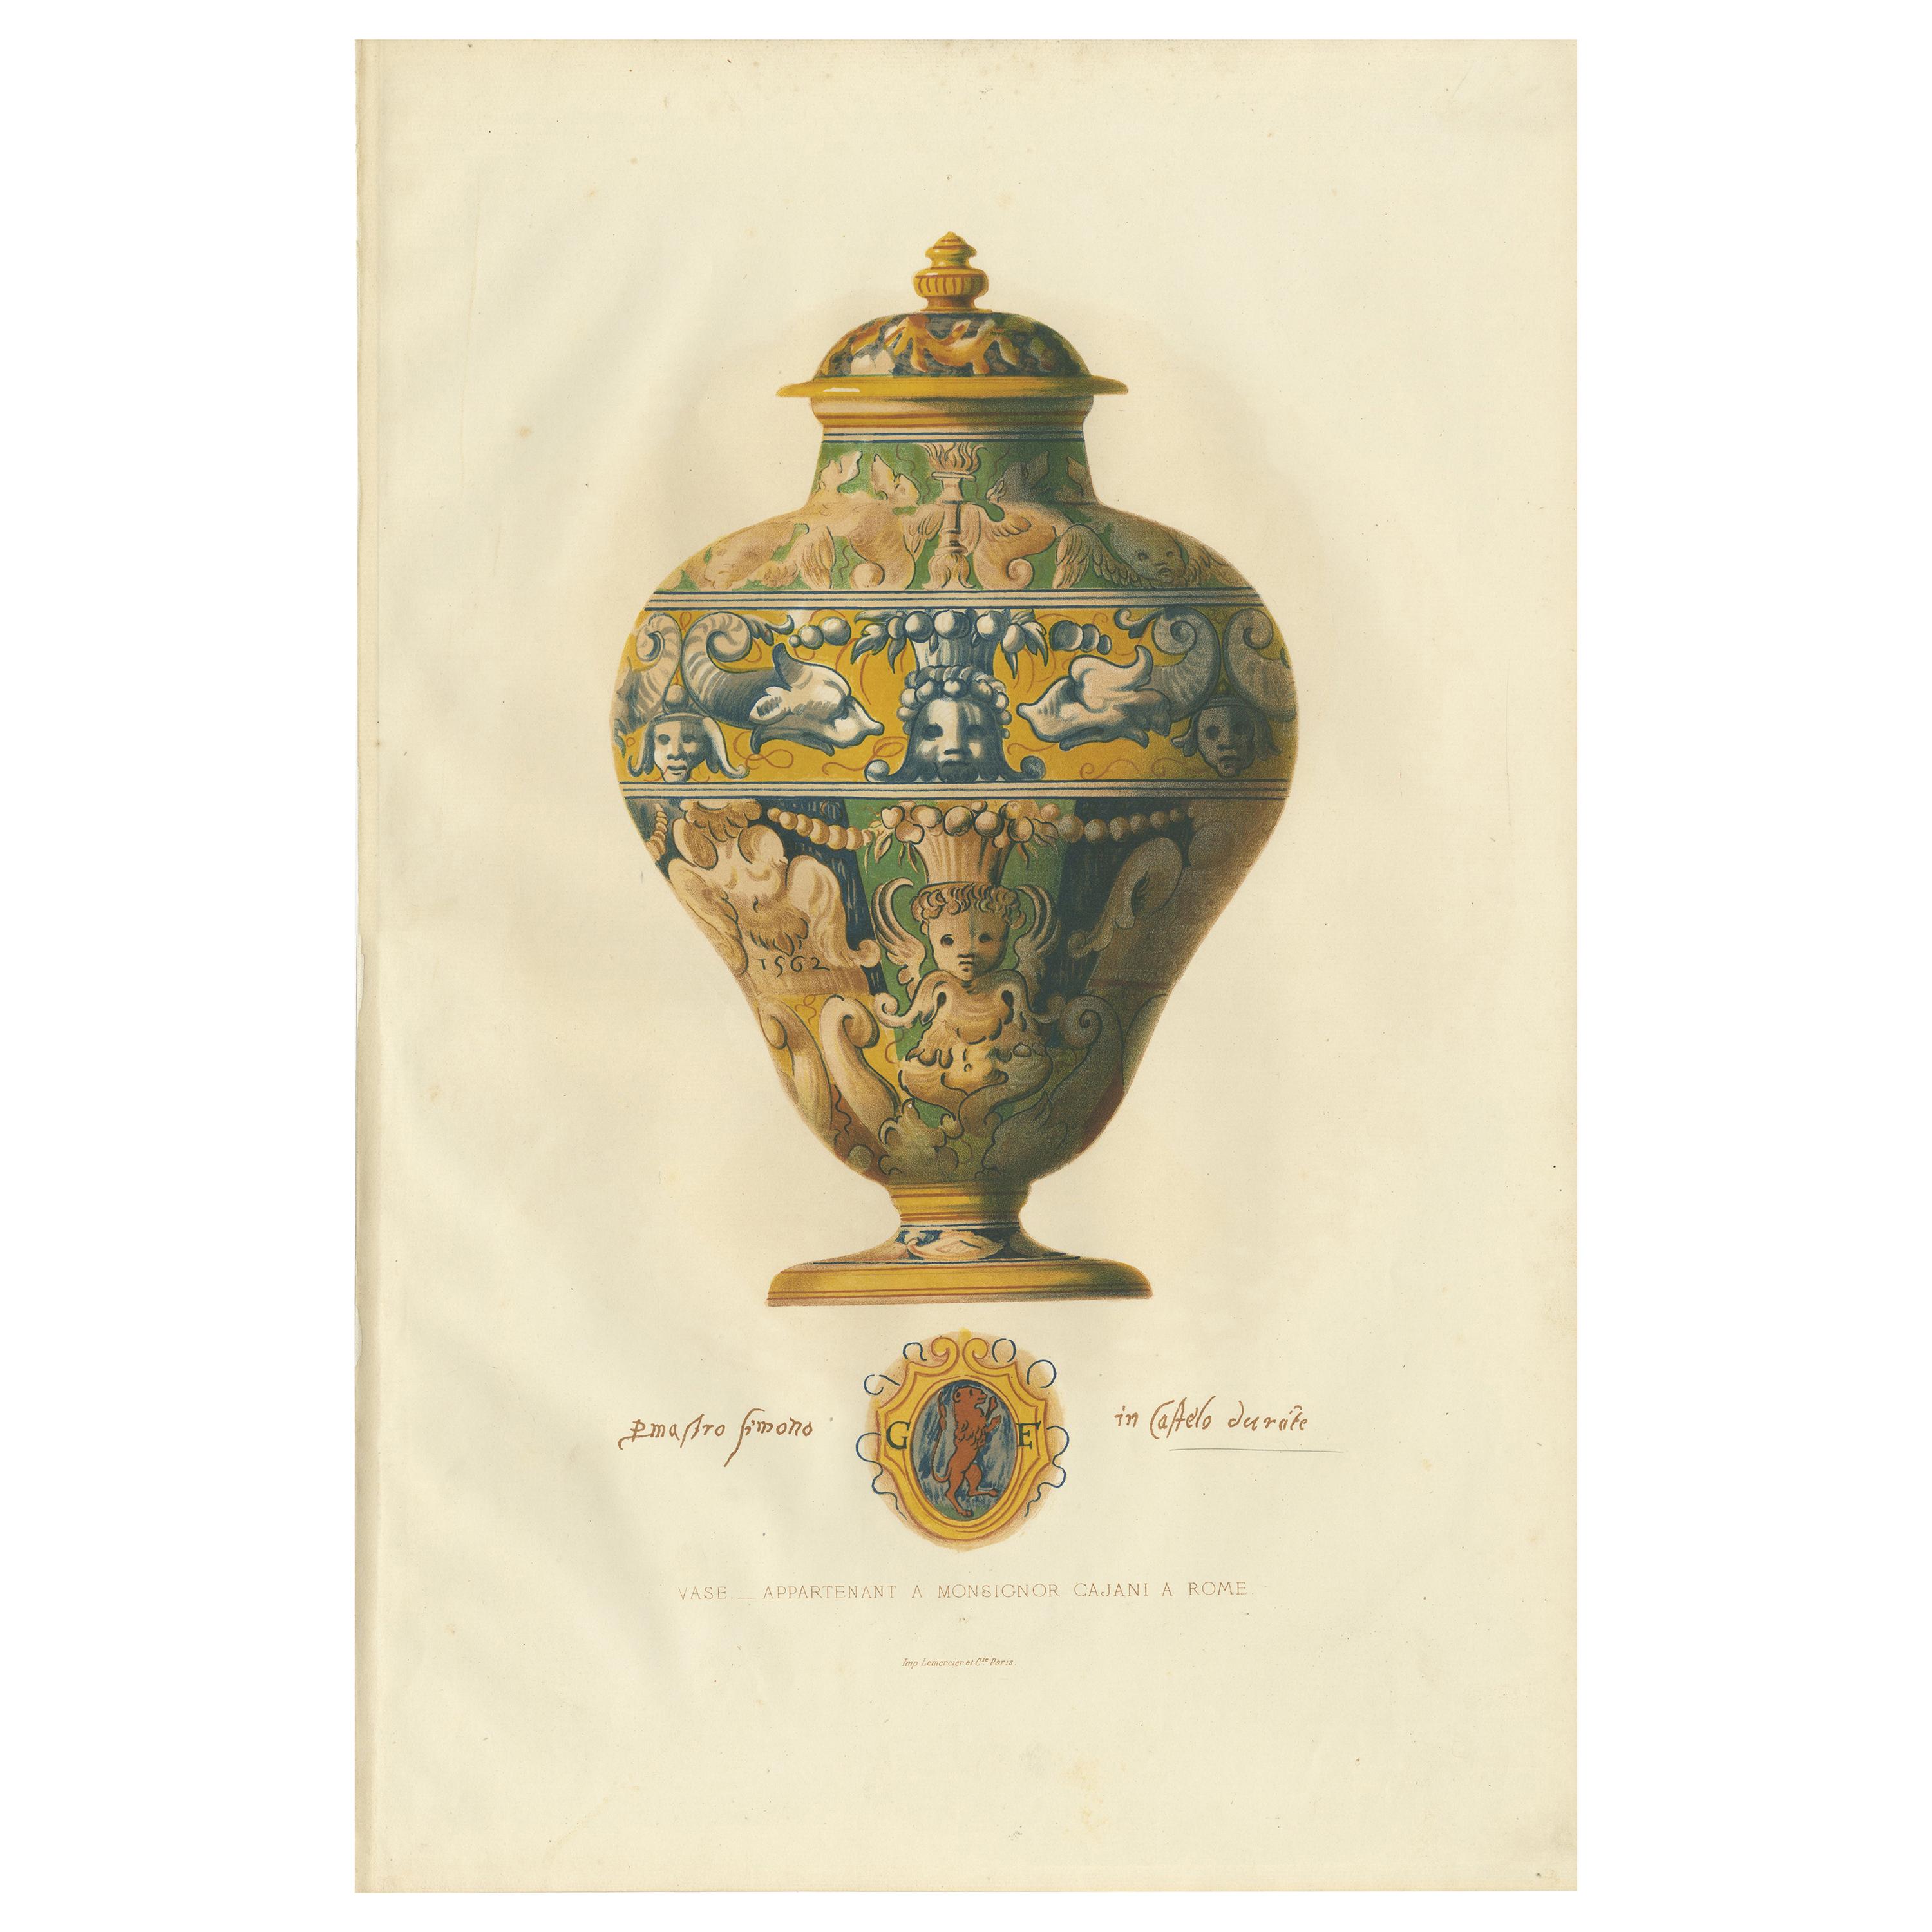 Antique Print of a Vase of Monsignor Cajani by Delange '1869' For Sale